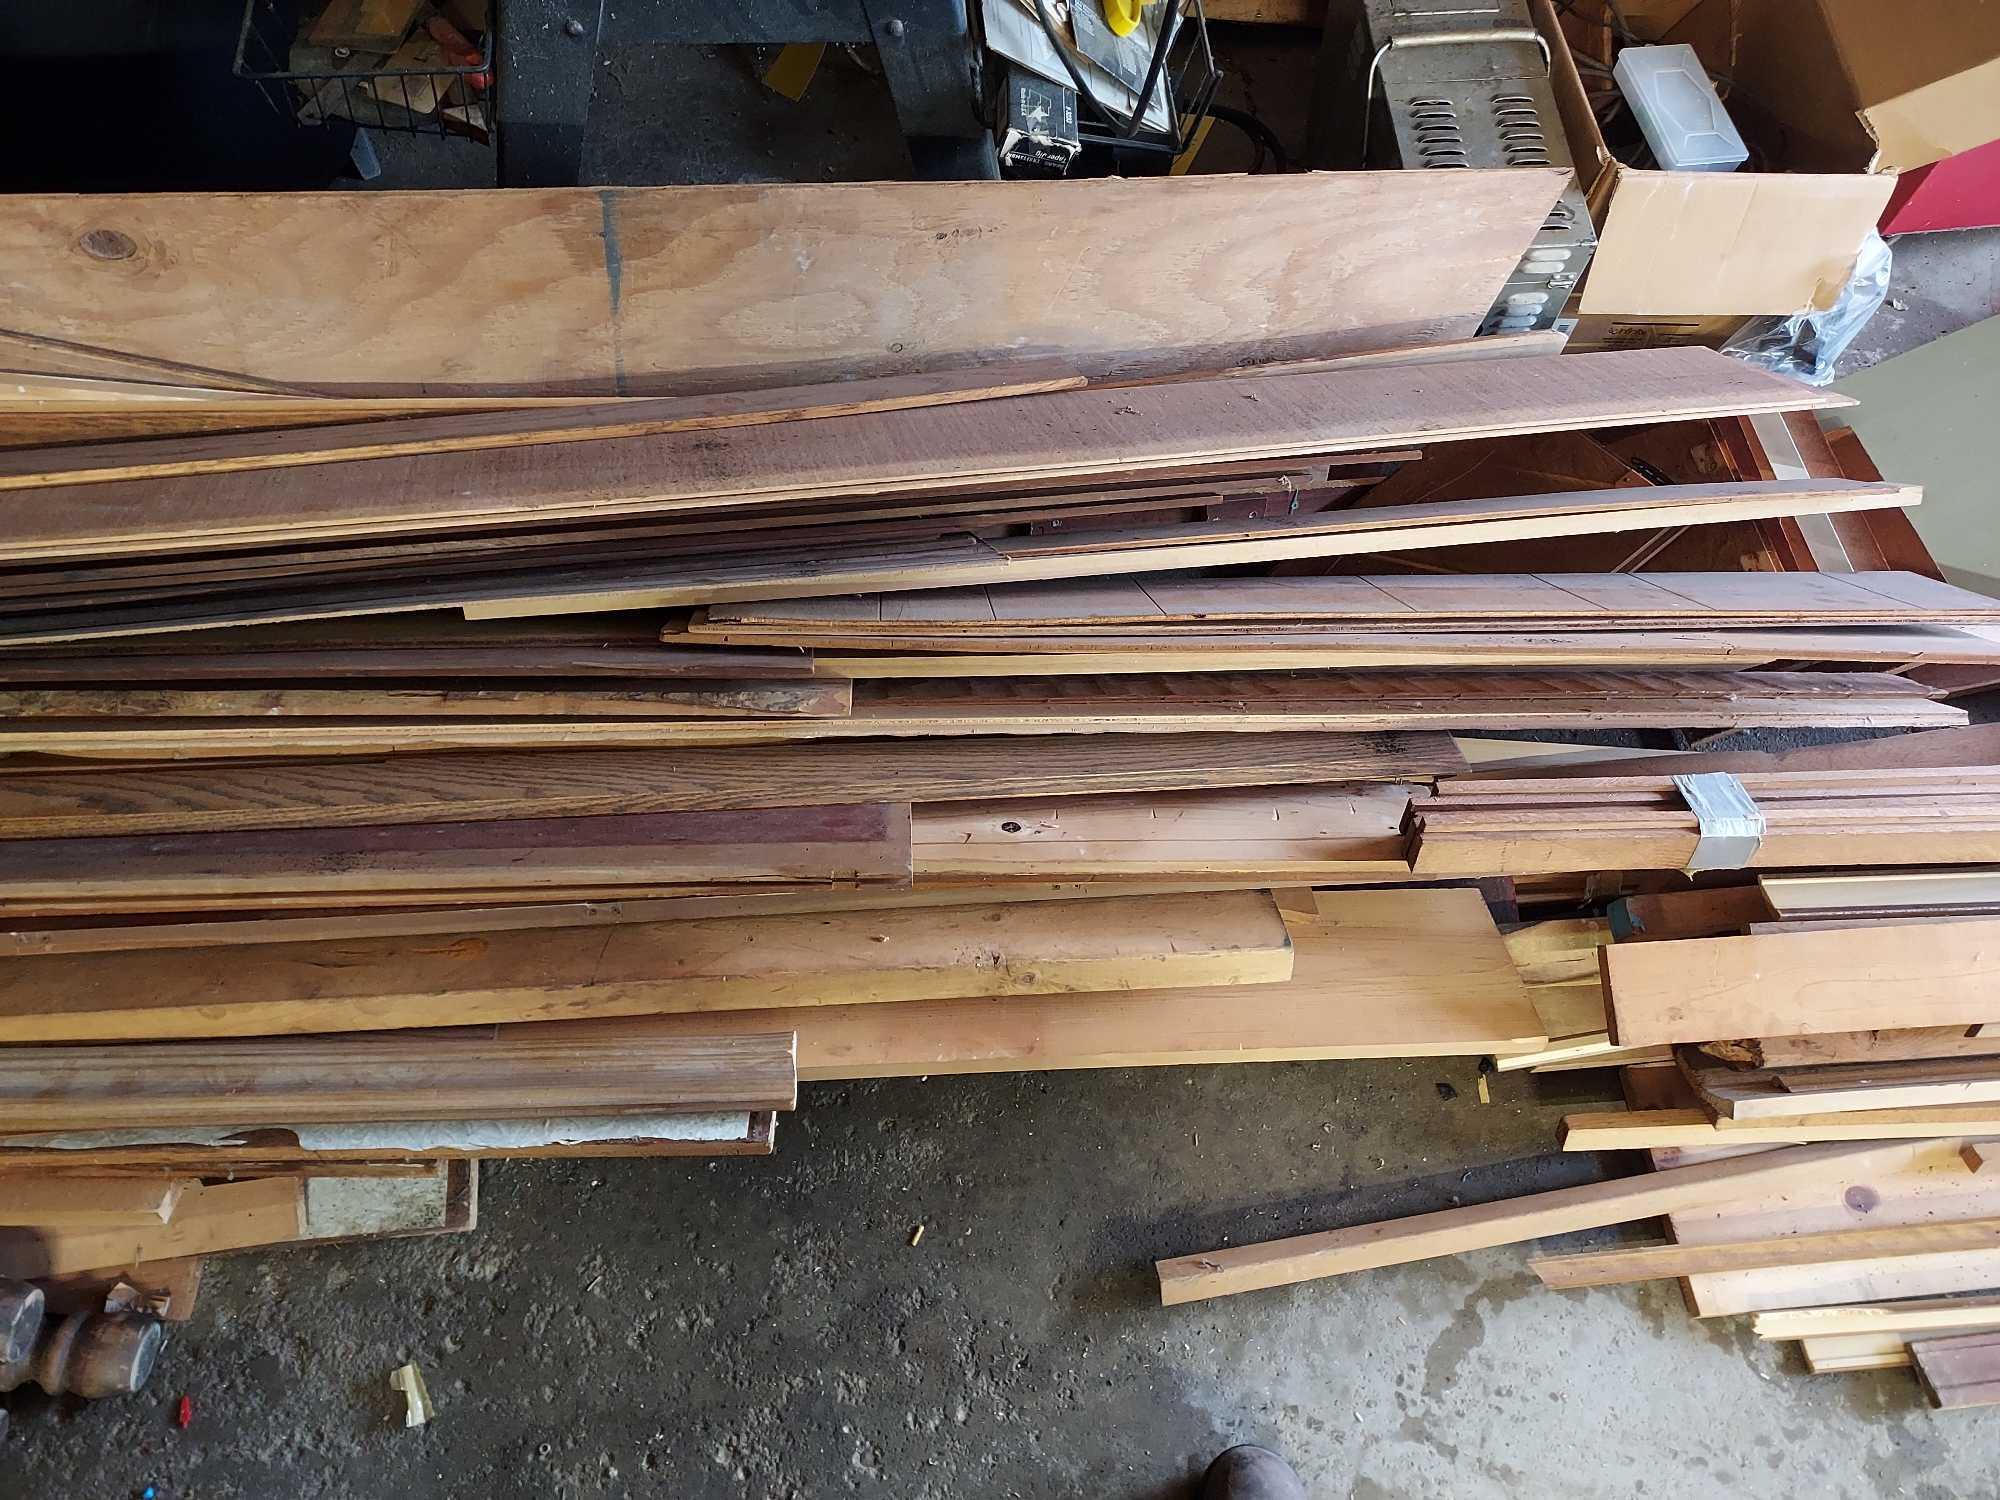 Large Assortment of Lumber